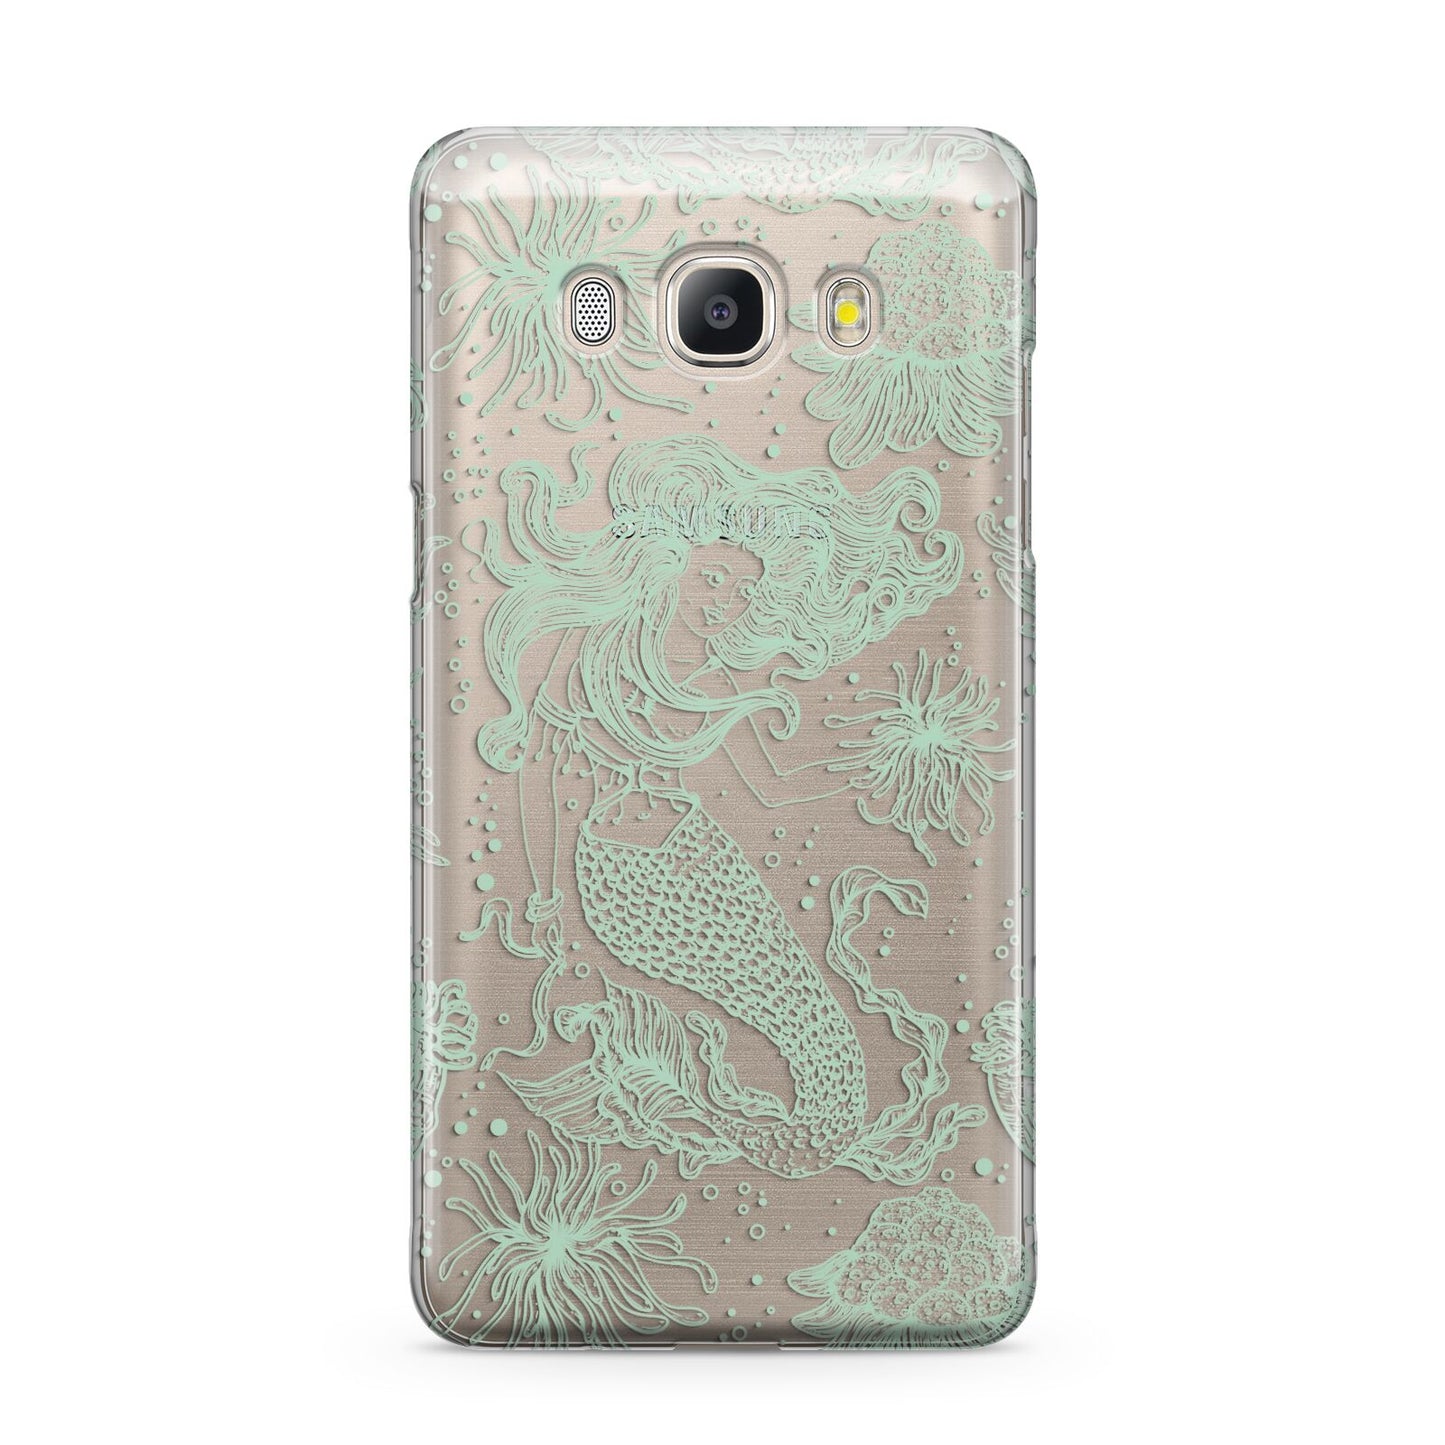 Sea Mermaid Samsung Galaxy J5 2016 Case